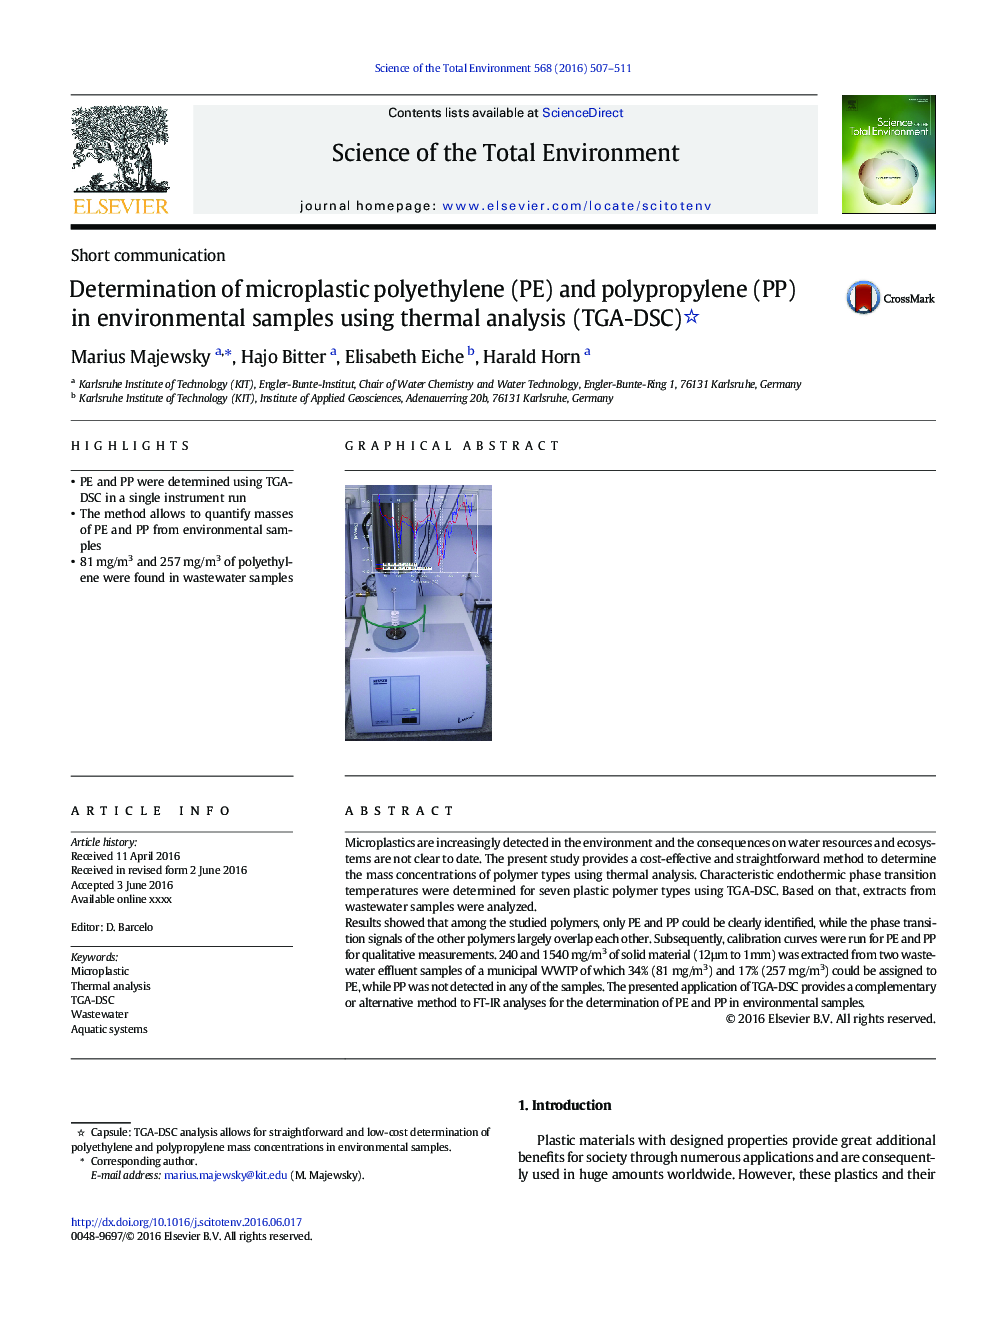 Determination of microplastic polyethylene (PE) and polypropylene (PP) in environmental samples using thermal analysis (TGA-DSC)